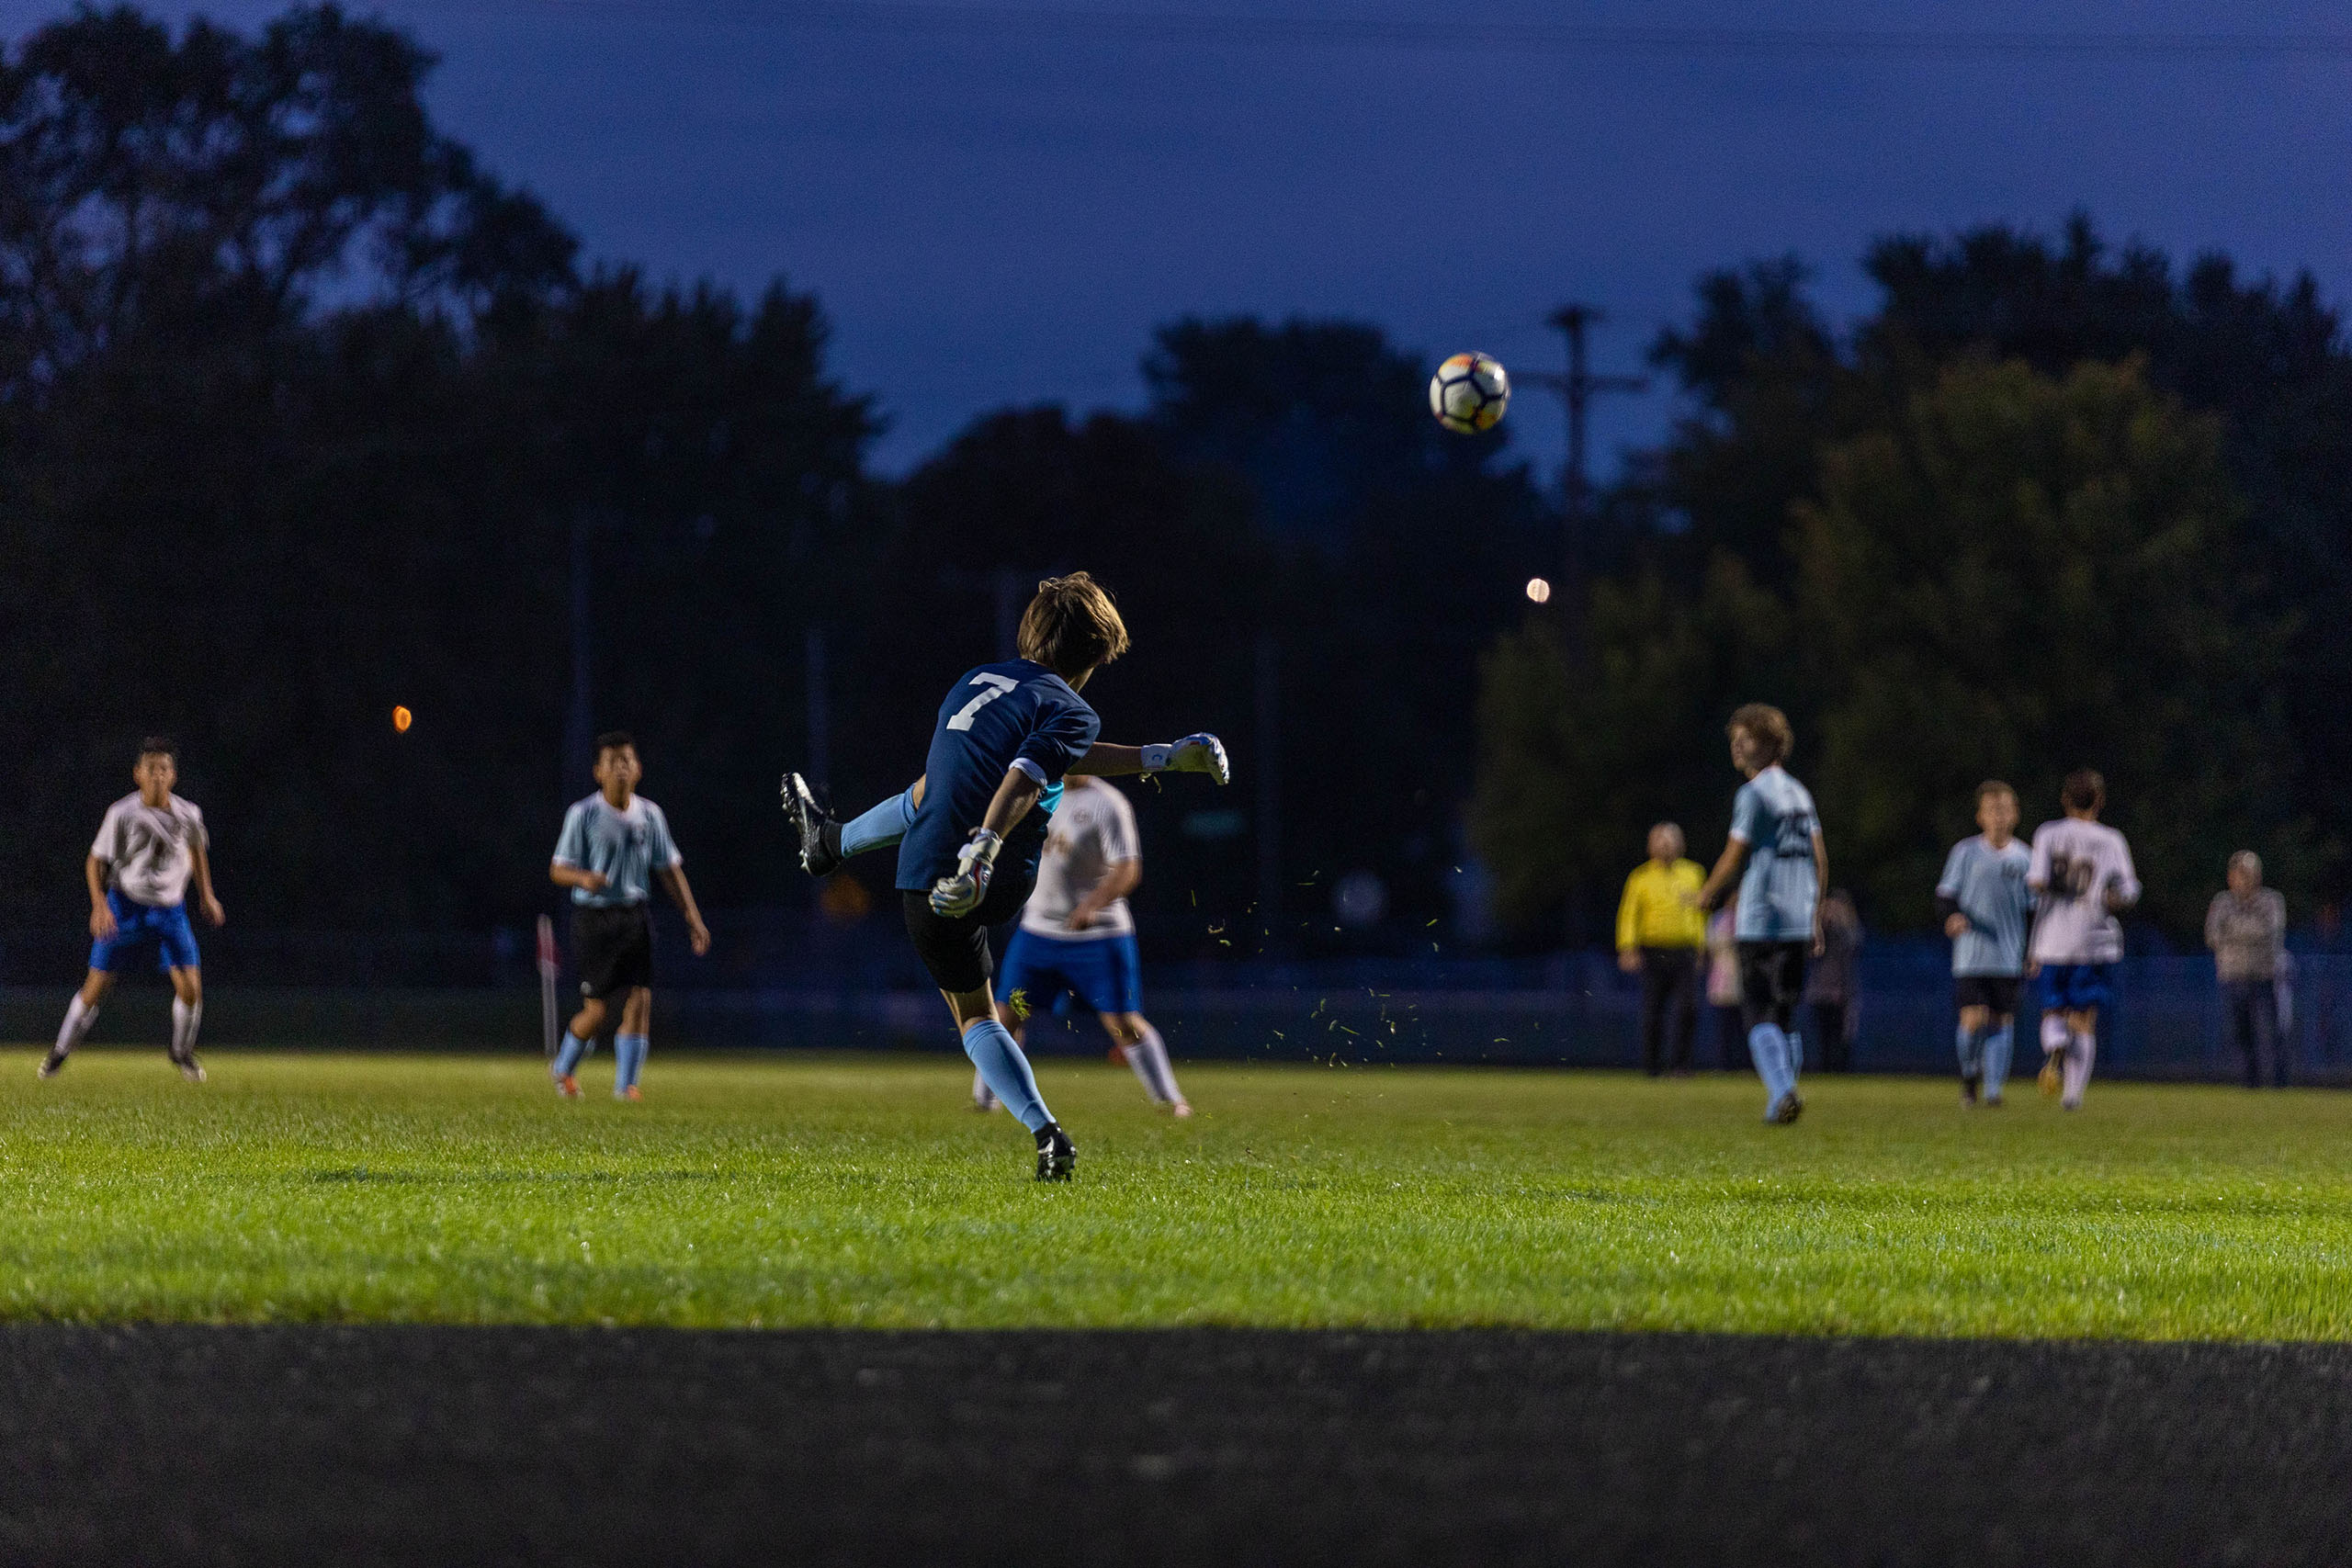 A soccer goalie kicks a soccer ball back into play from the net.